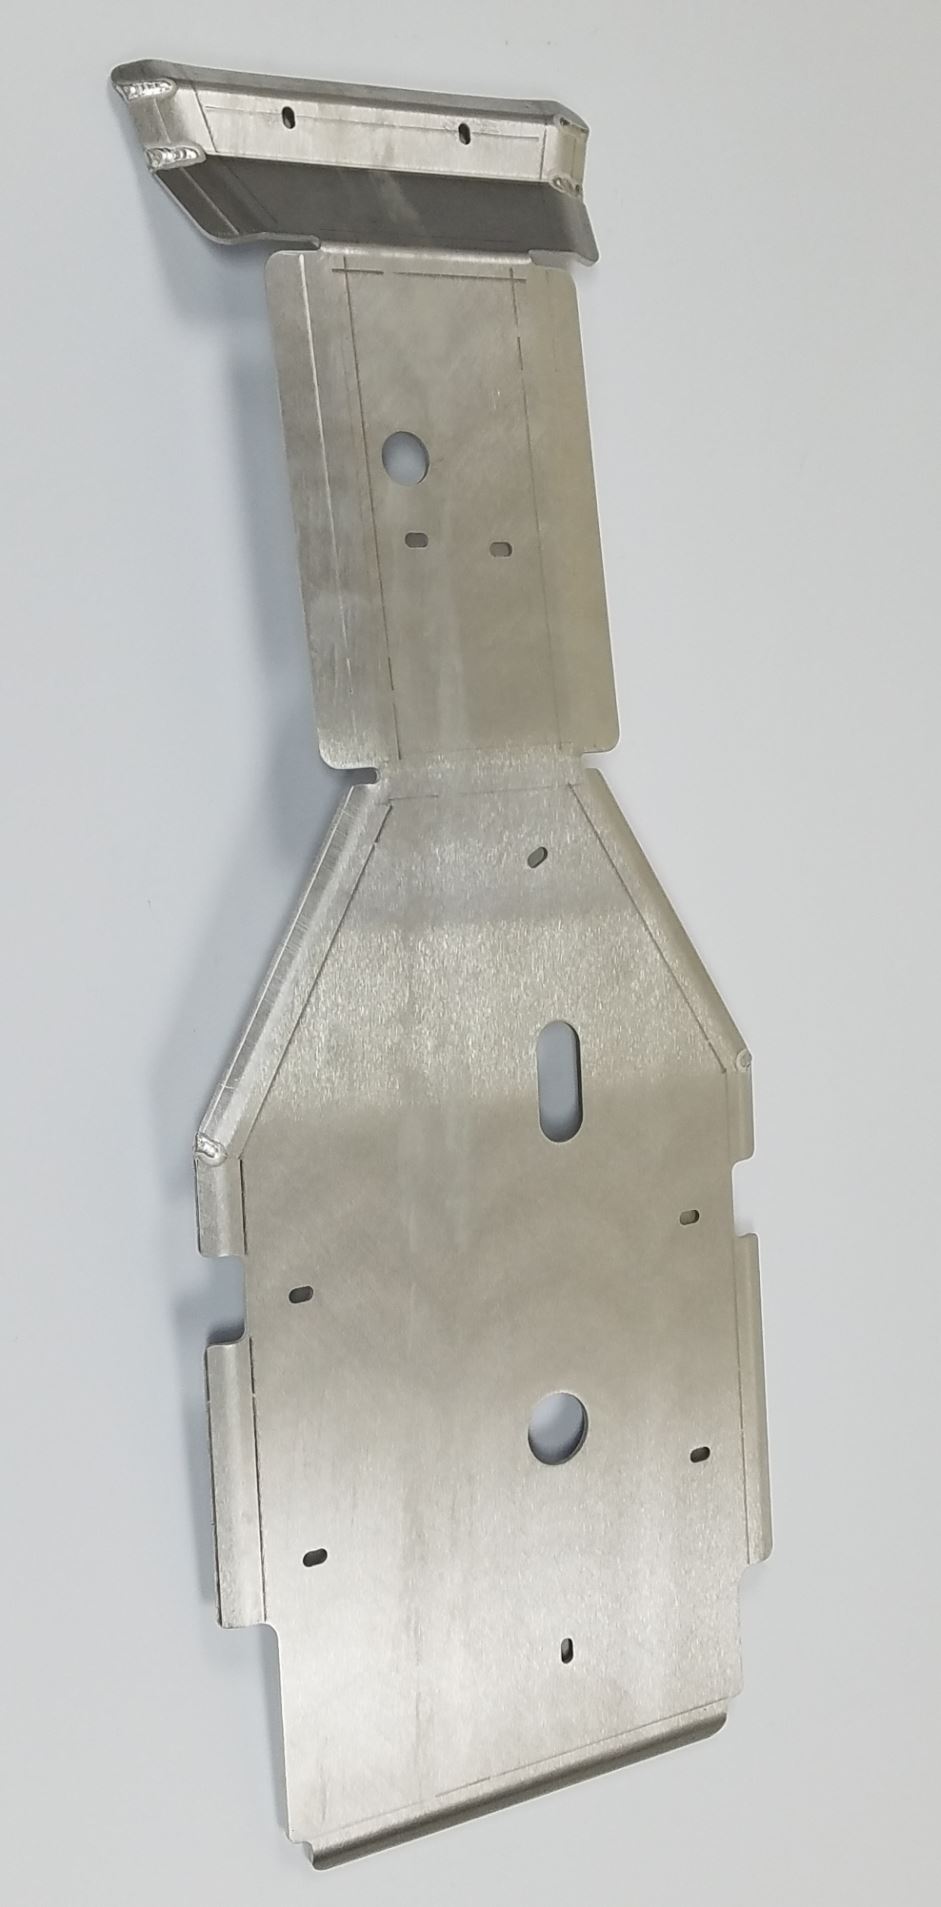 4-Piece Complete Aluminum Skid Plate Set, Kawasaki Prairie 700